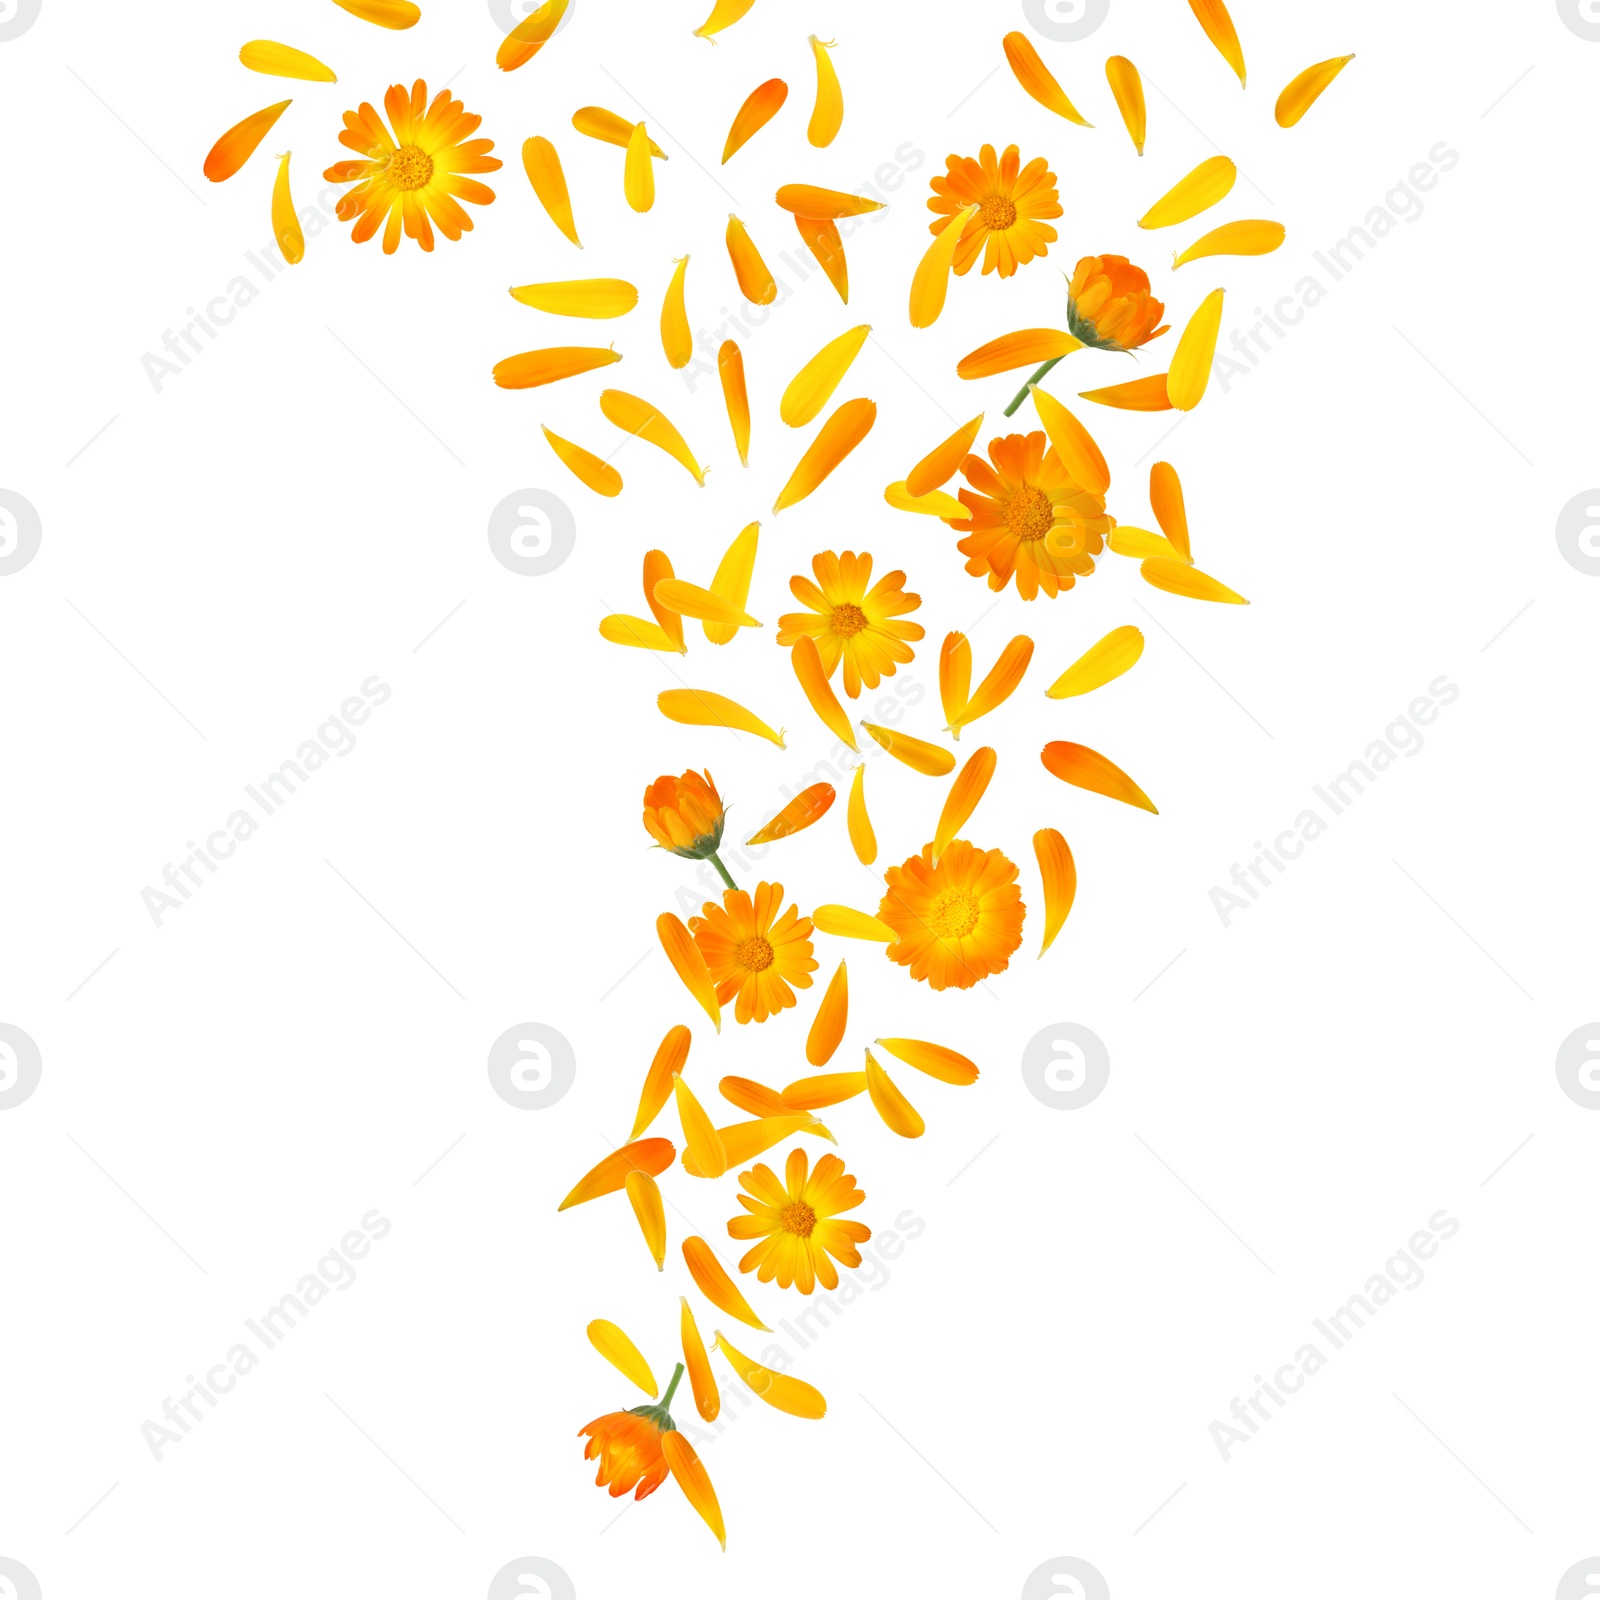 Image of Beautiful calendula flowers and petals falling on white background